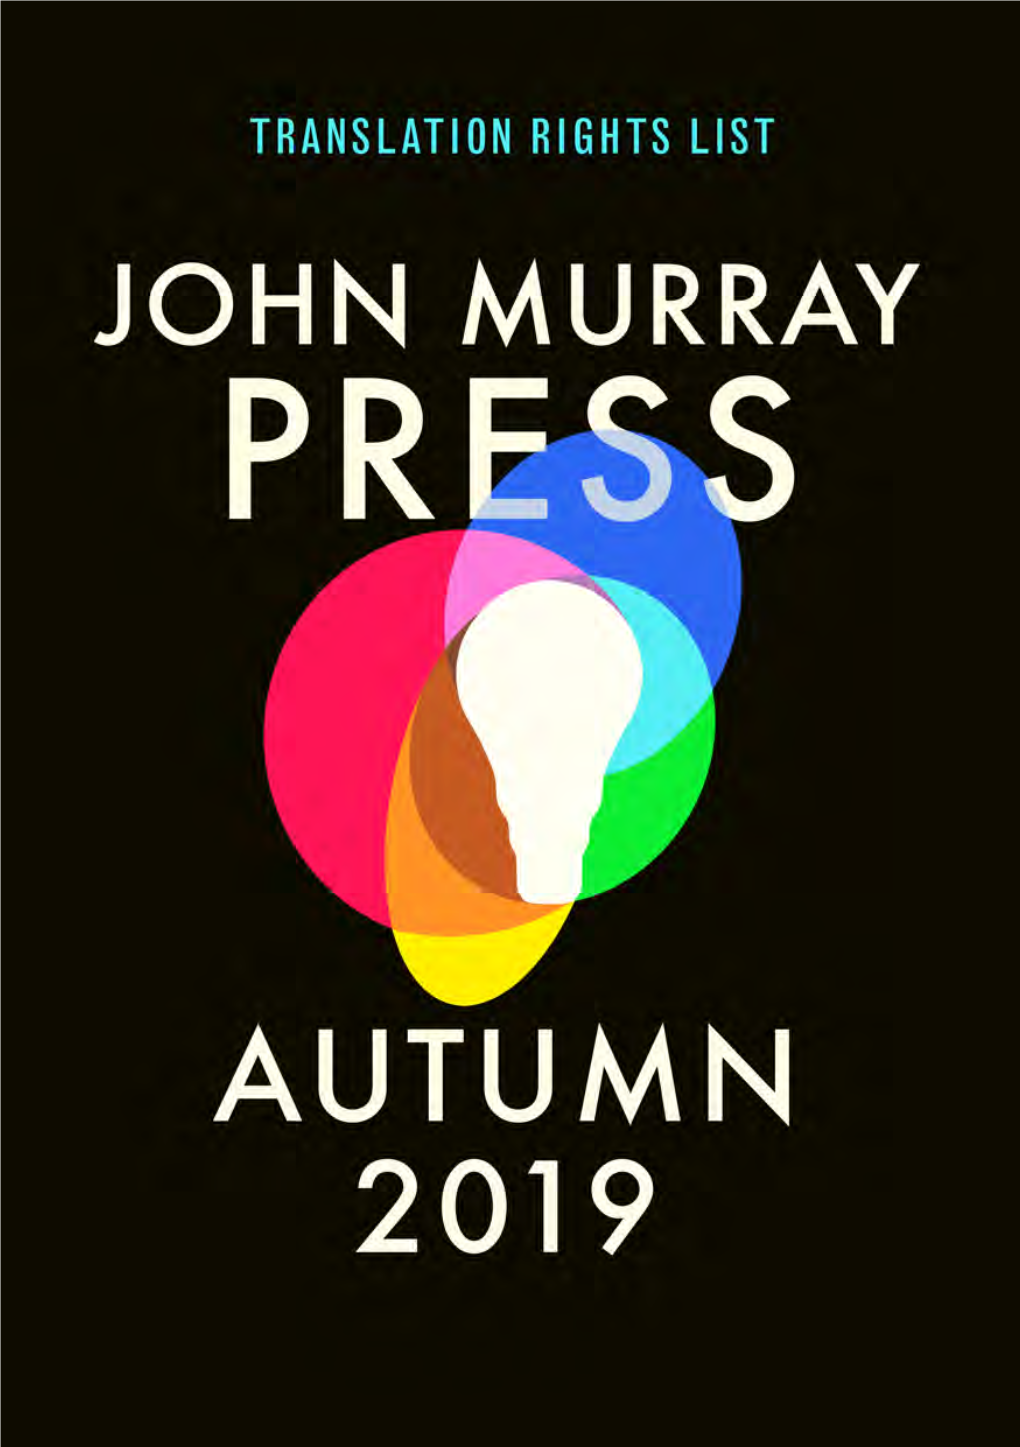 John-Murray-Translation-Rights-List